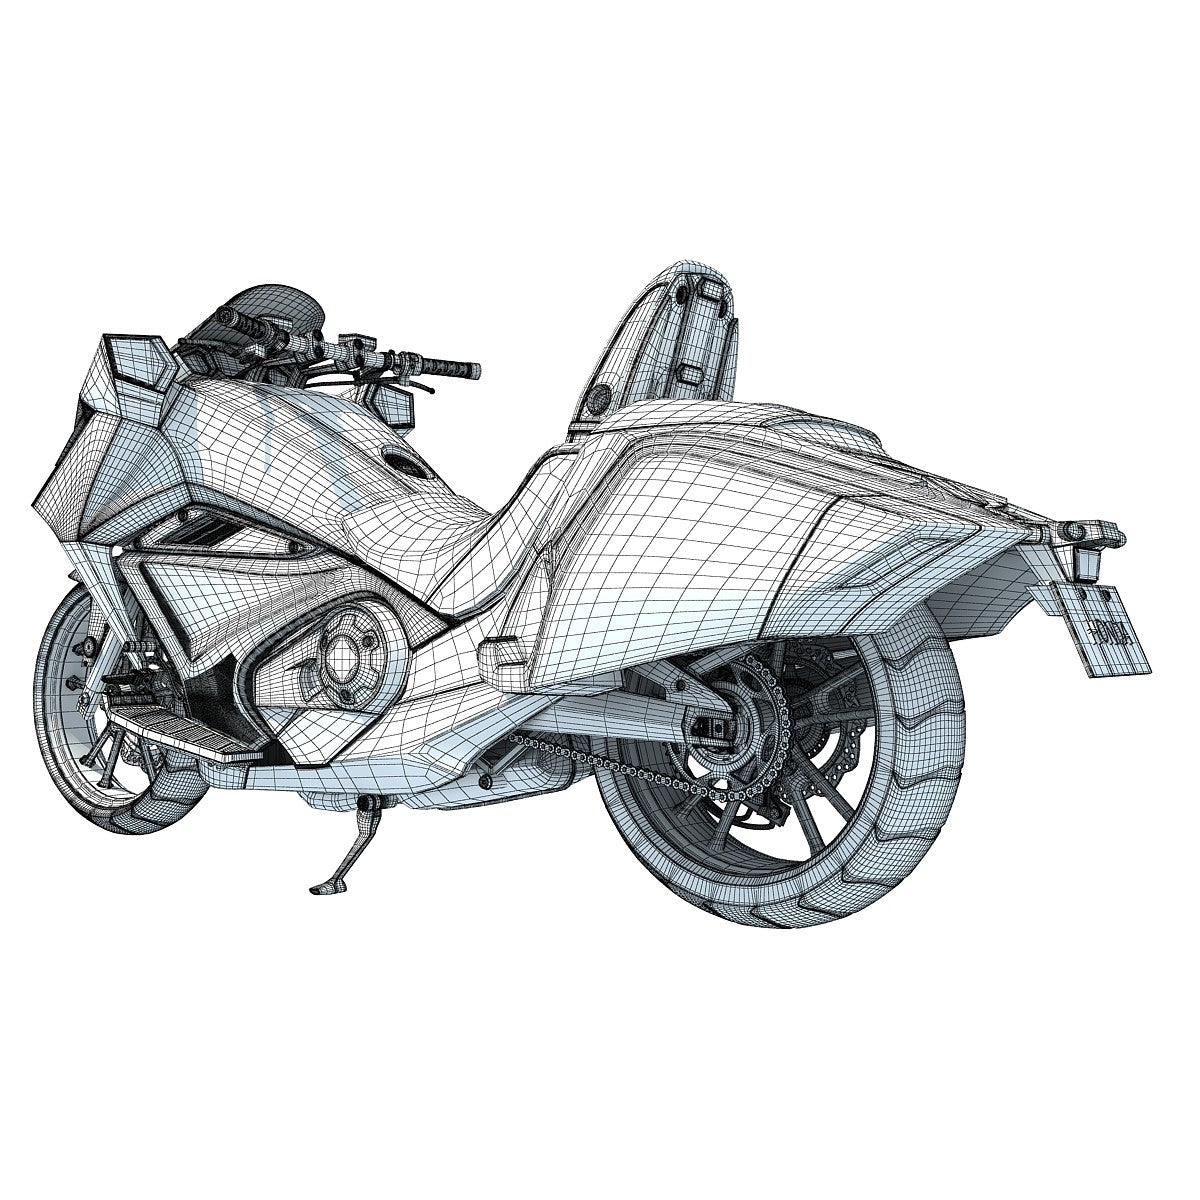 3D Motorcycle Models